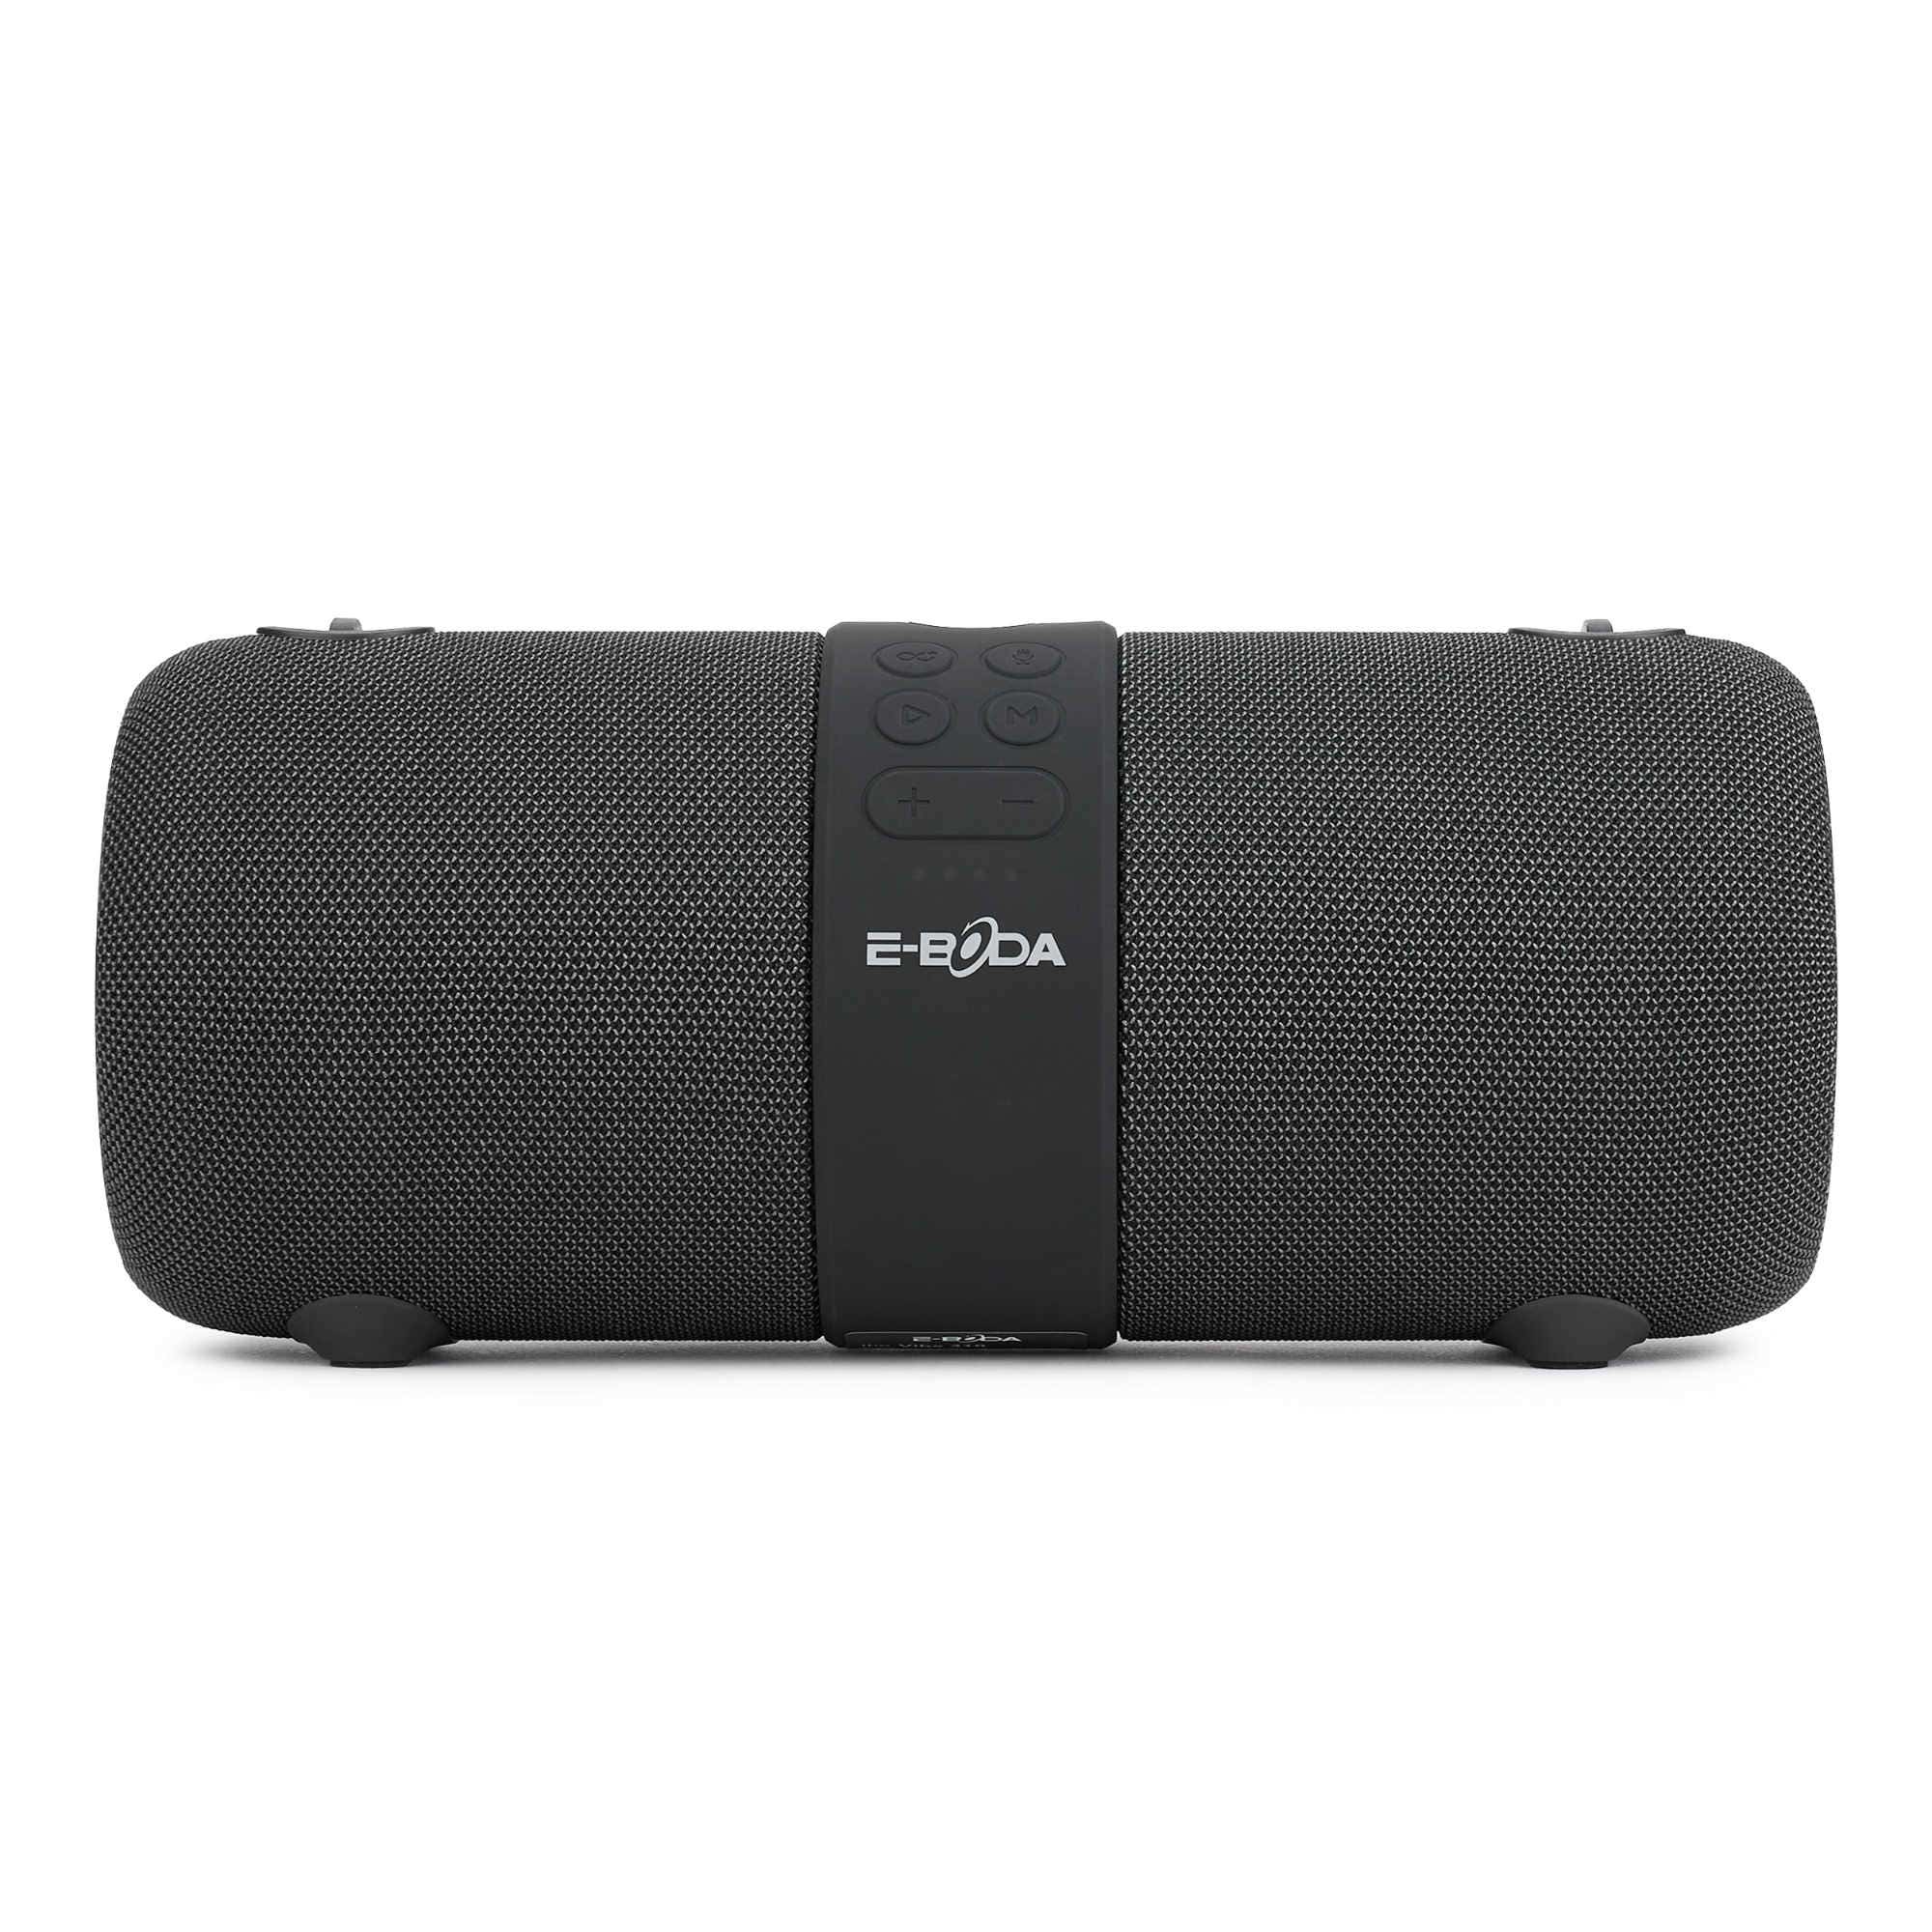 Boxa portabila E-Boda The Vibe 310, 25 W, USB, bluetooth 4.2, radio FM, negru